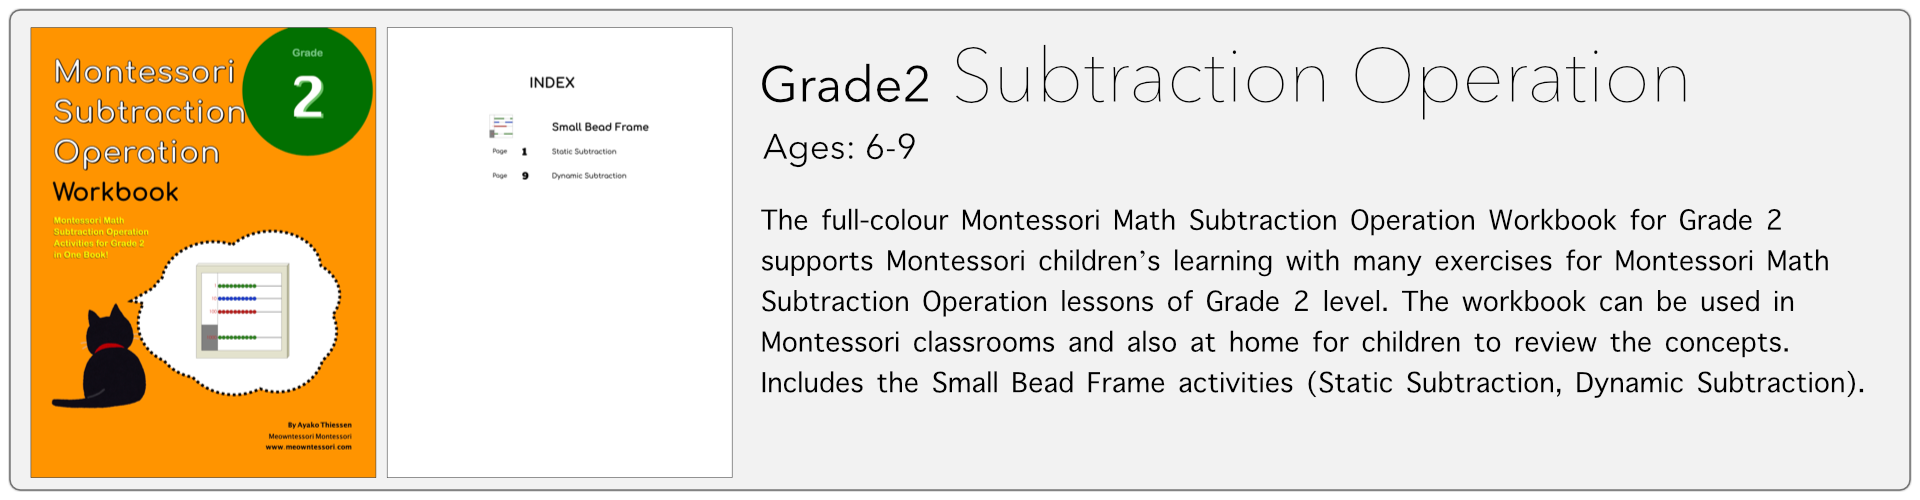 grade2 subtraction operation